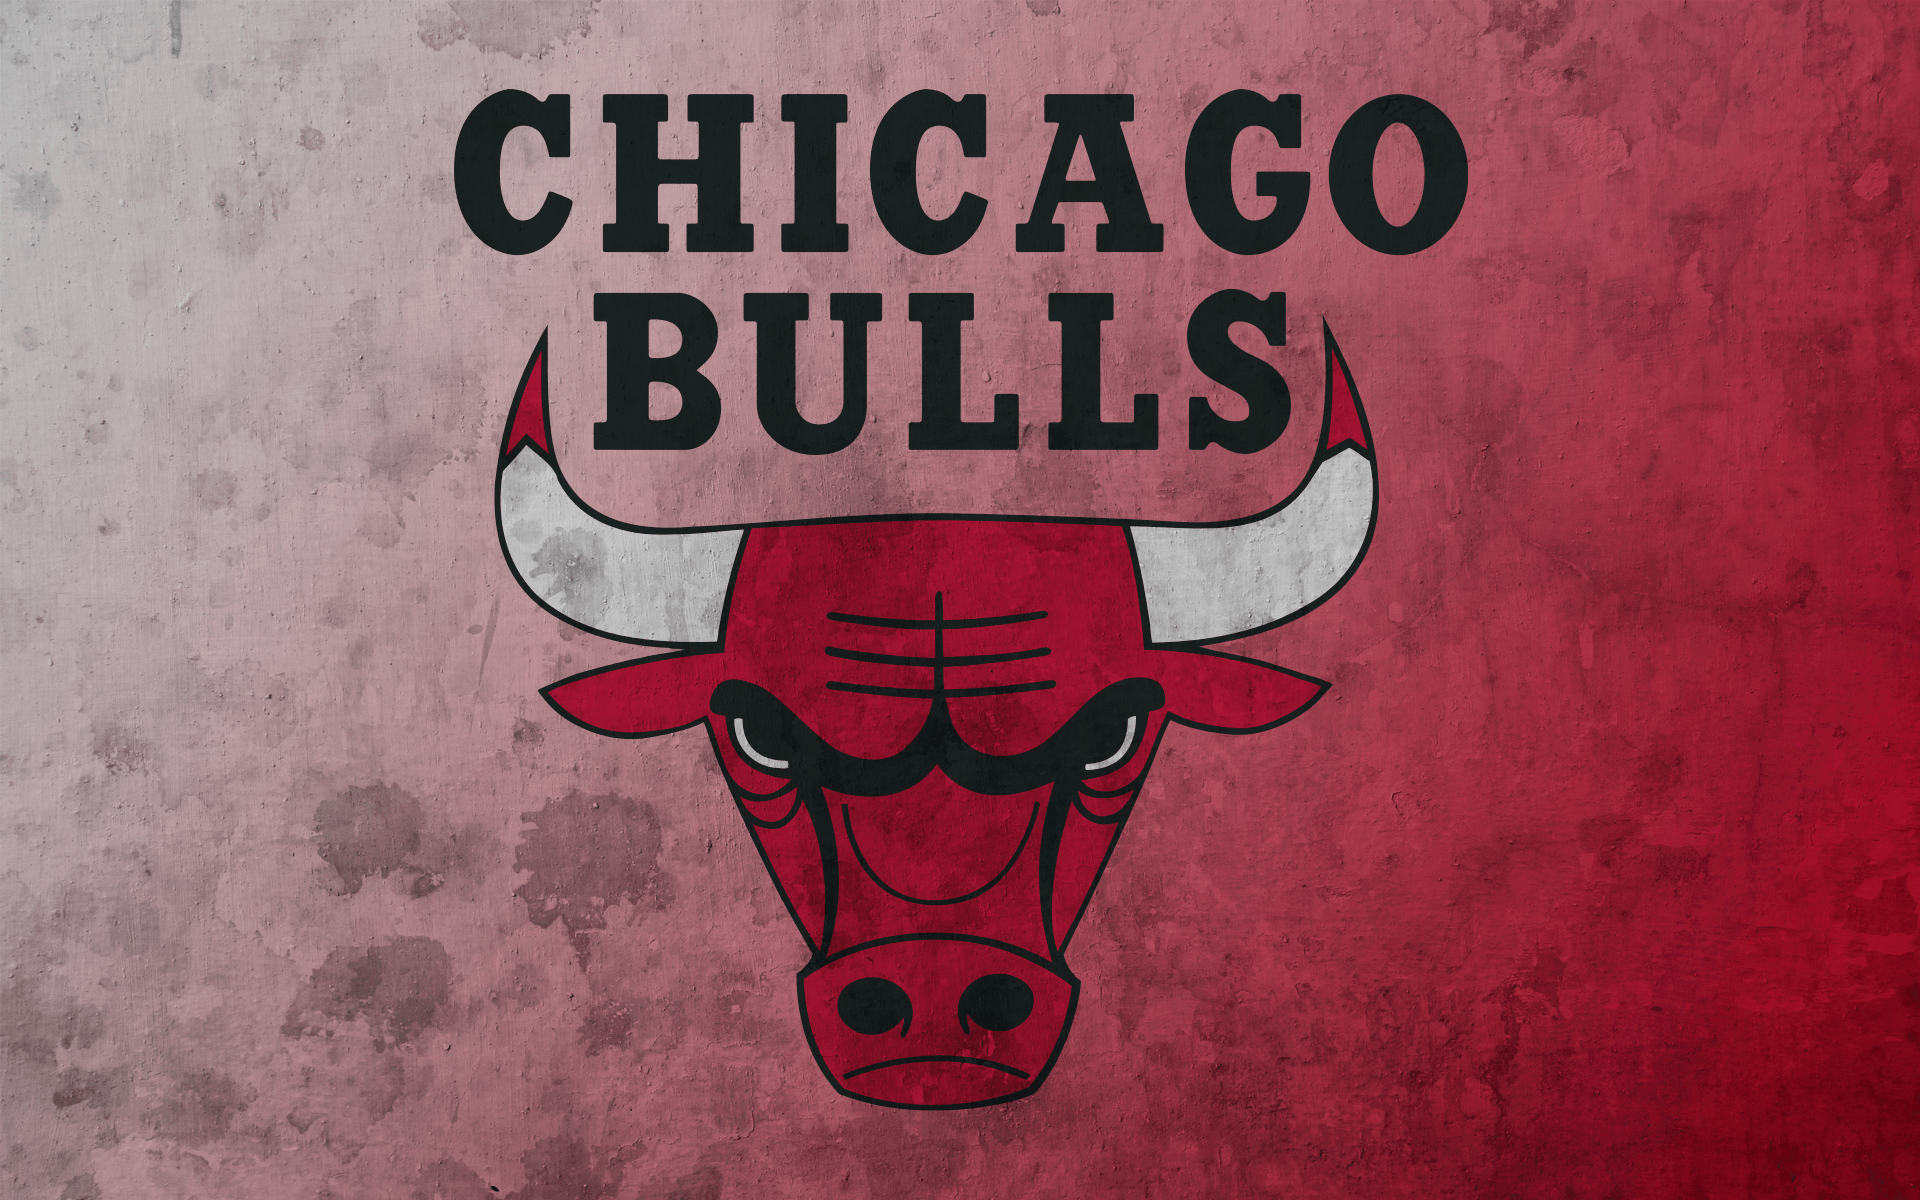 bull logo wallpaper